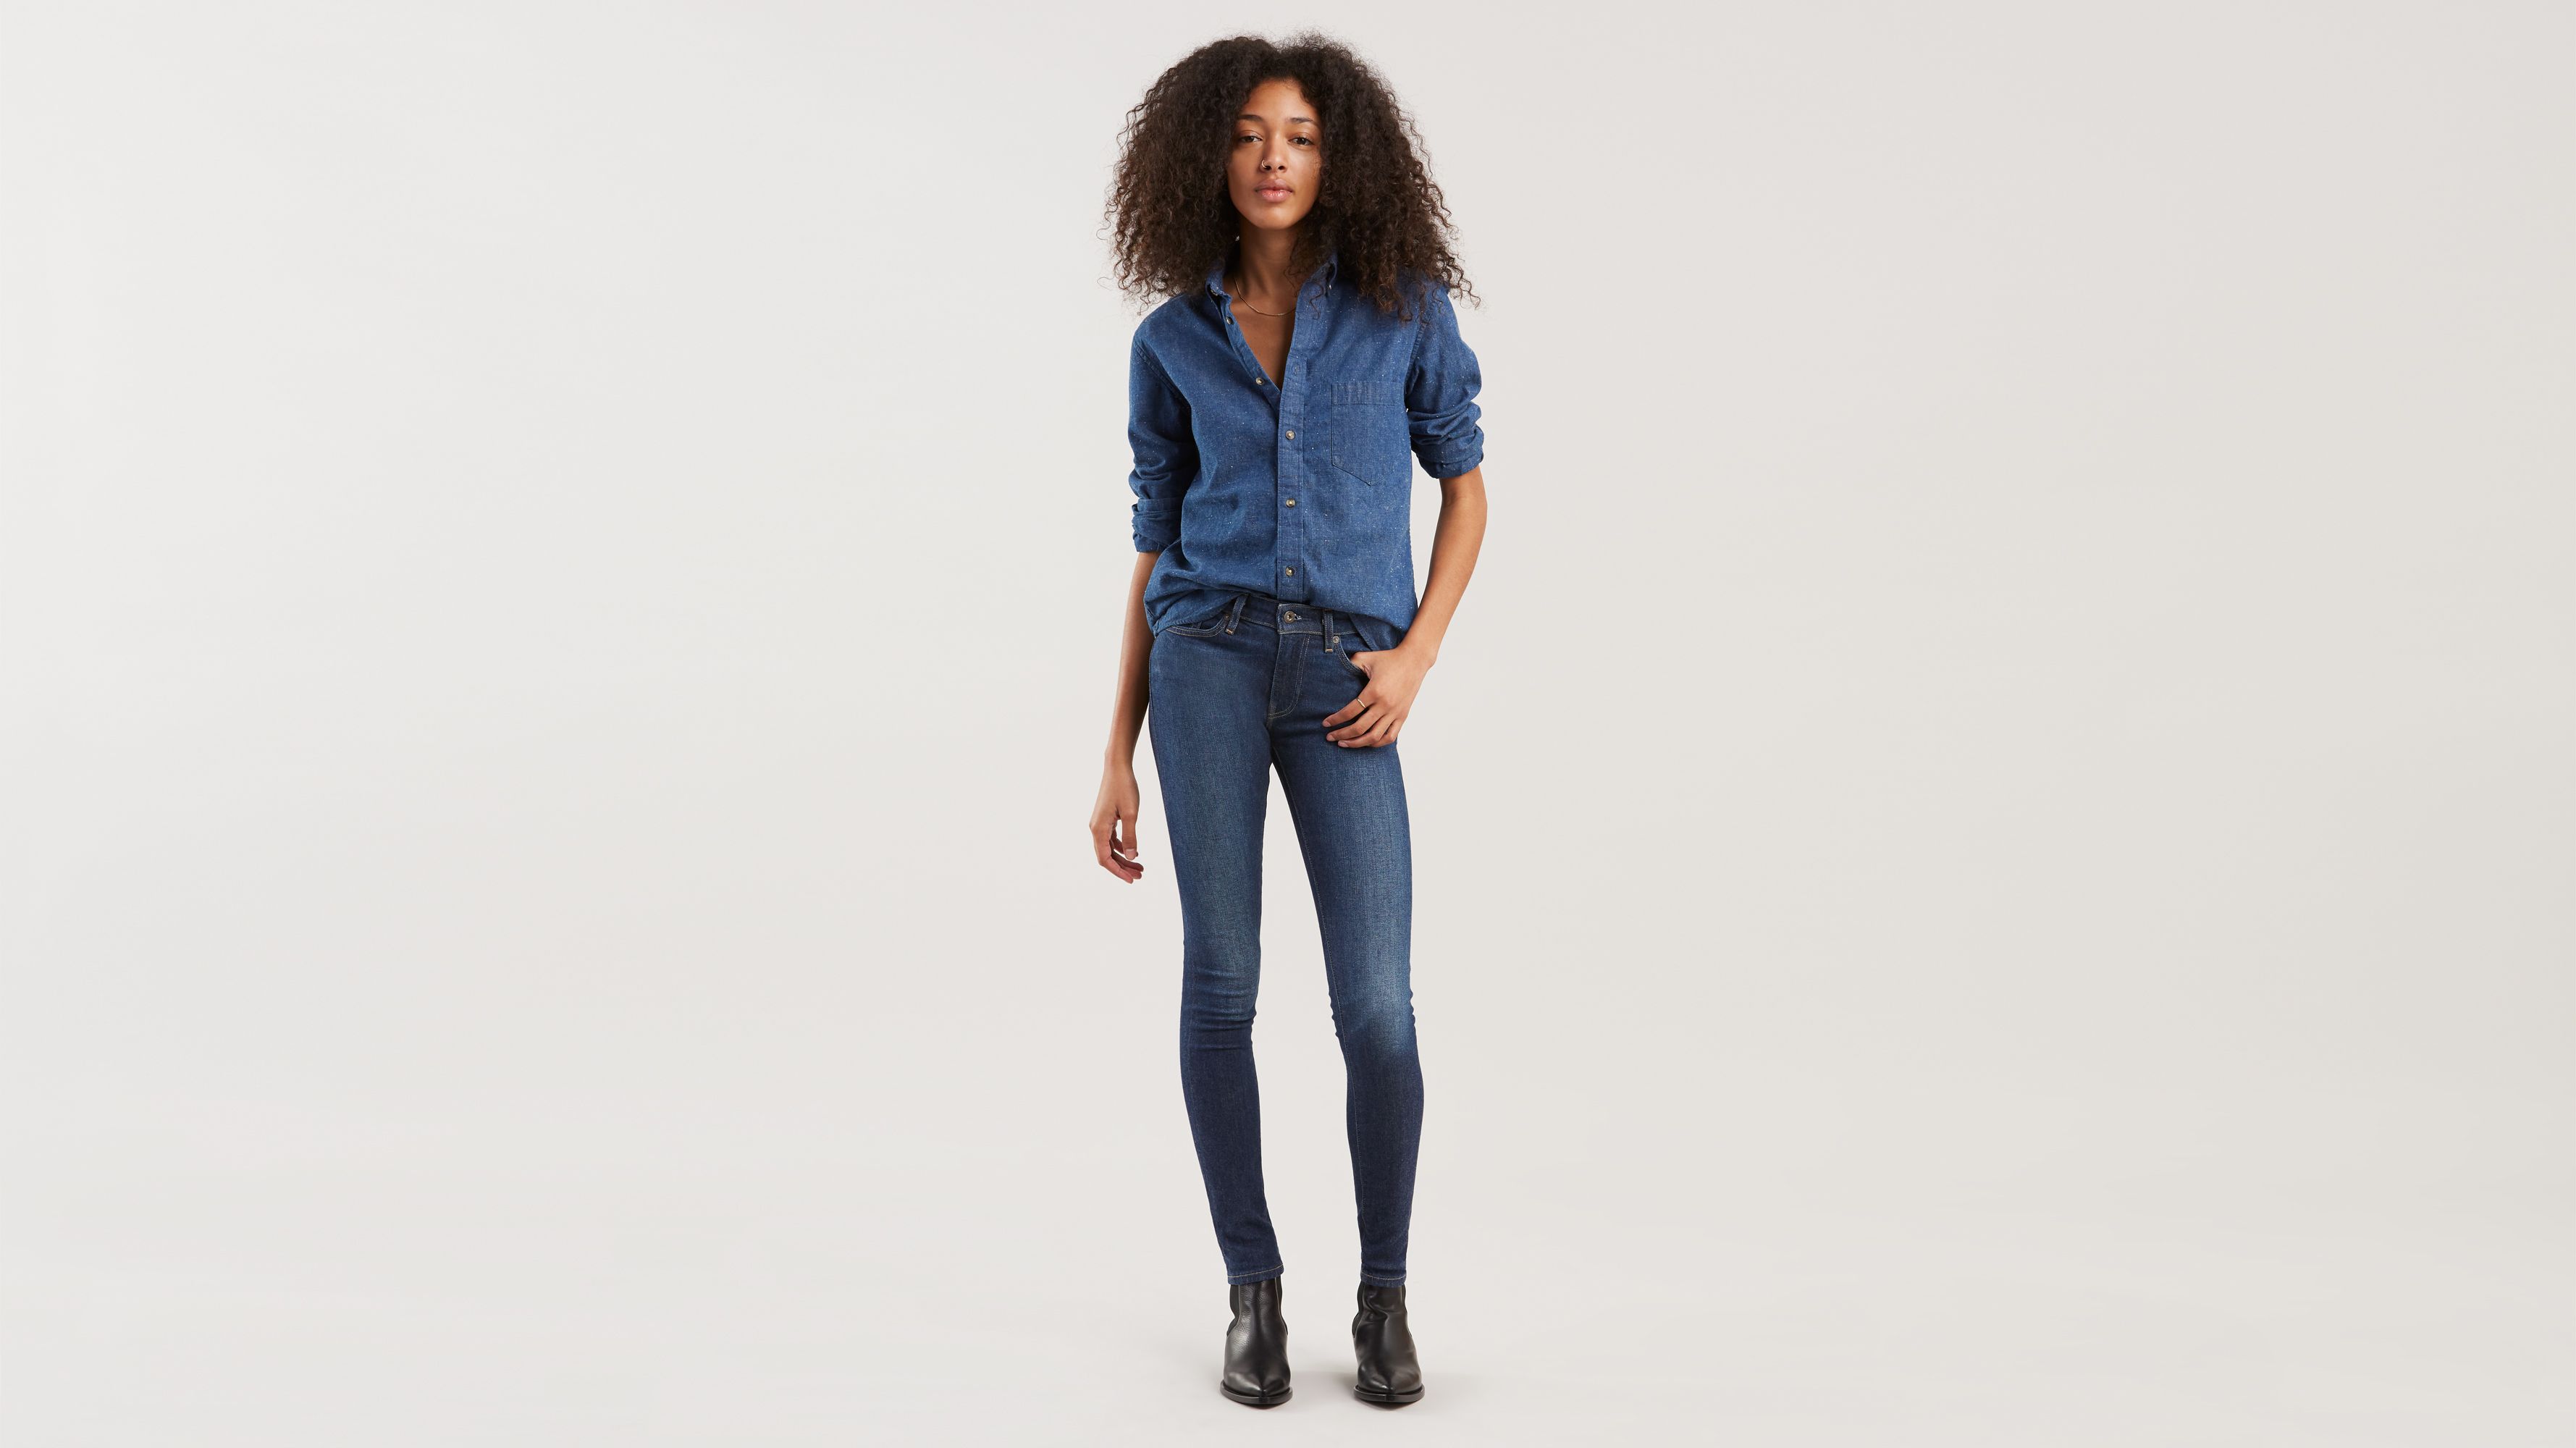 levi's dark blue women's jeans